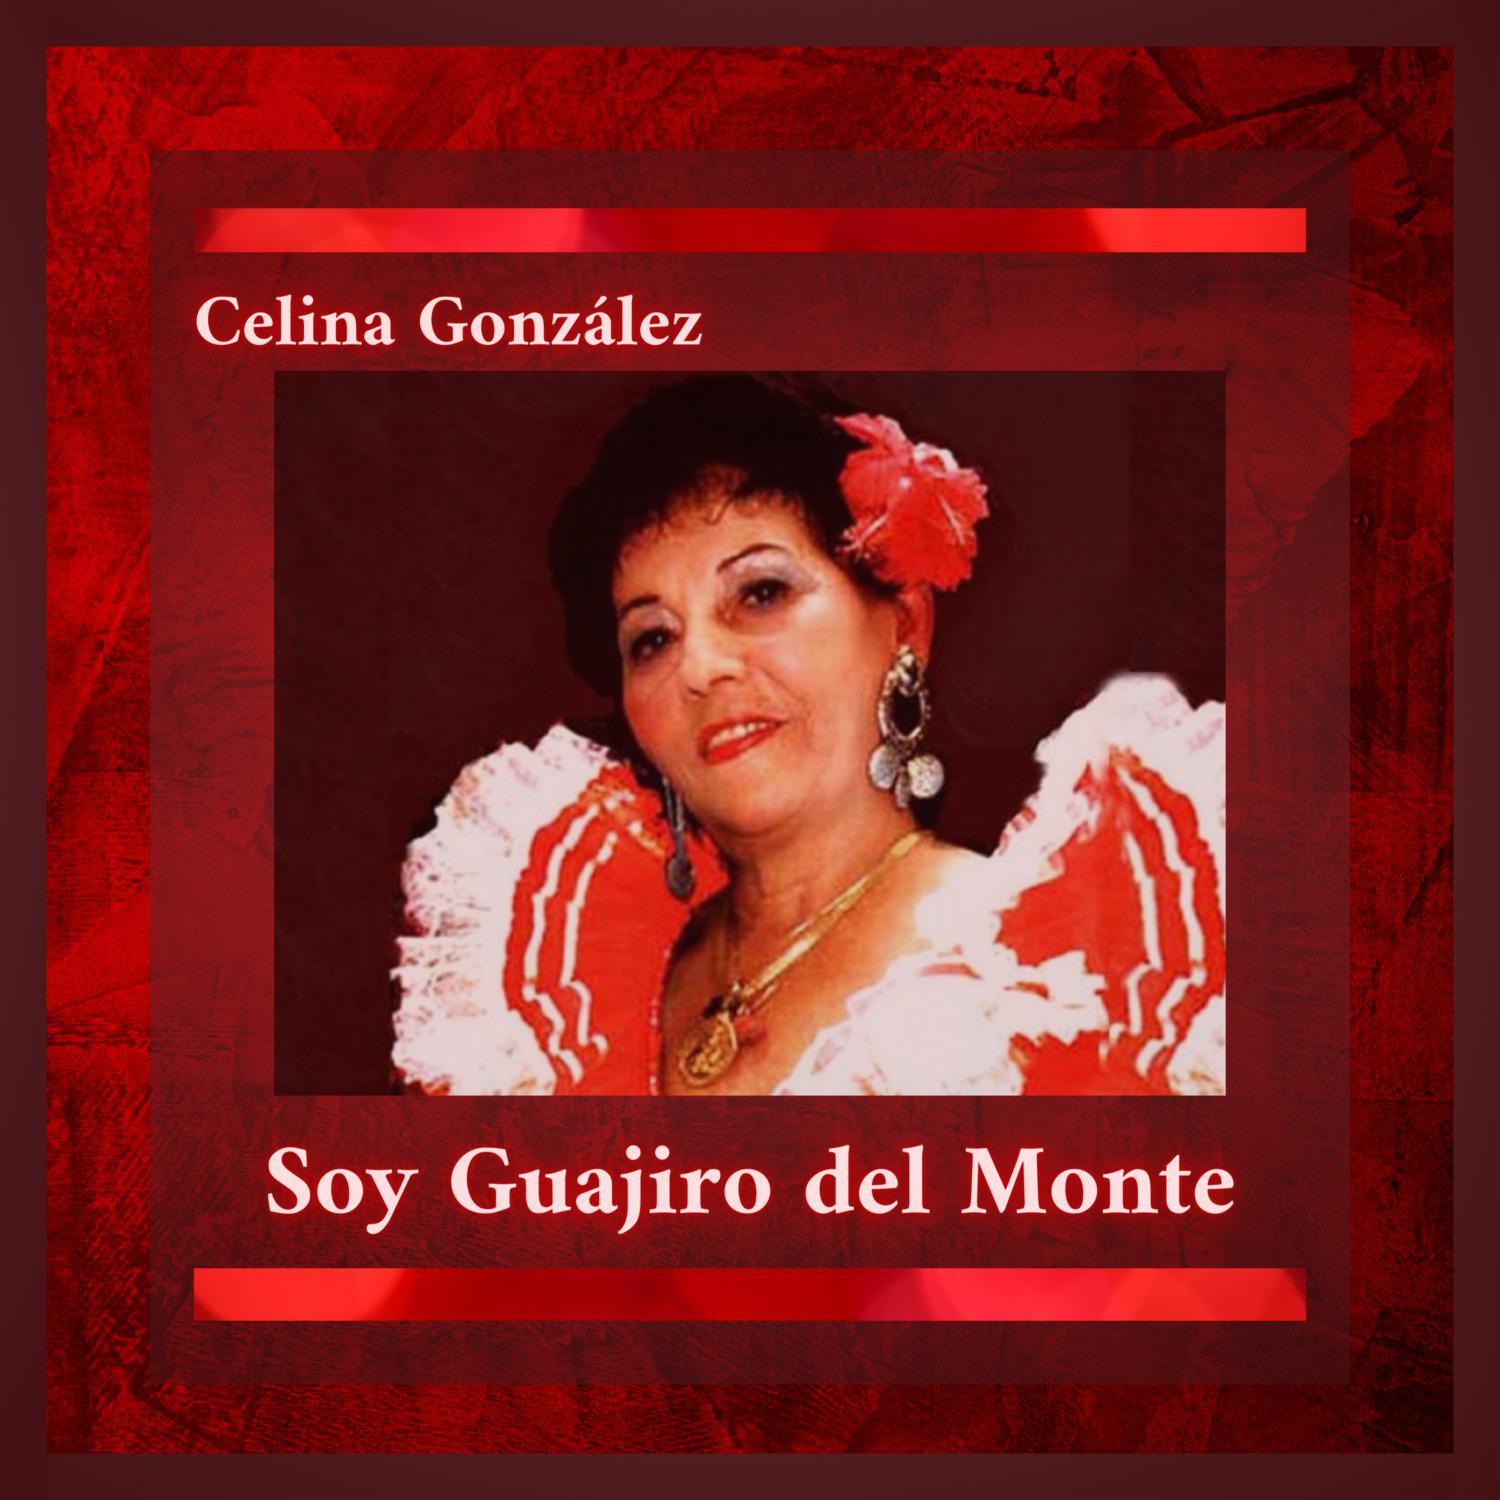 Celina González - Soy Guajiro del Monte